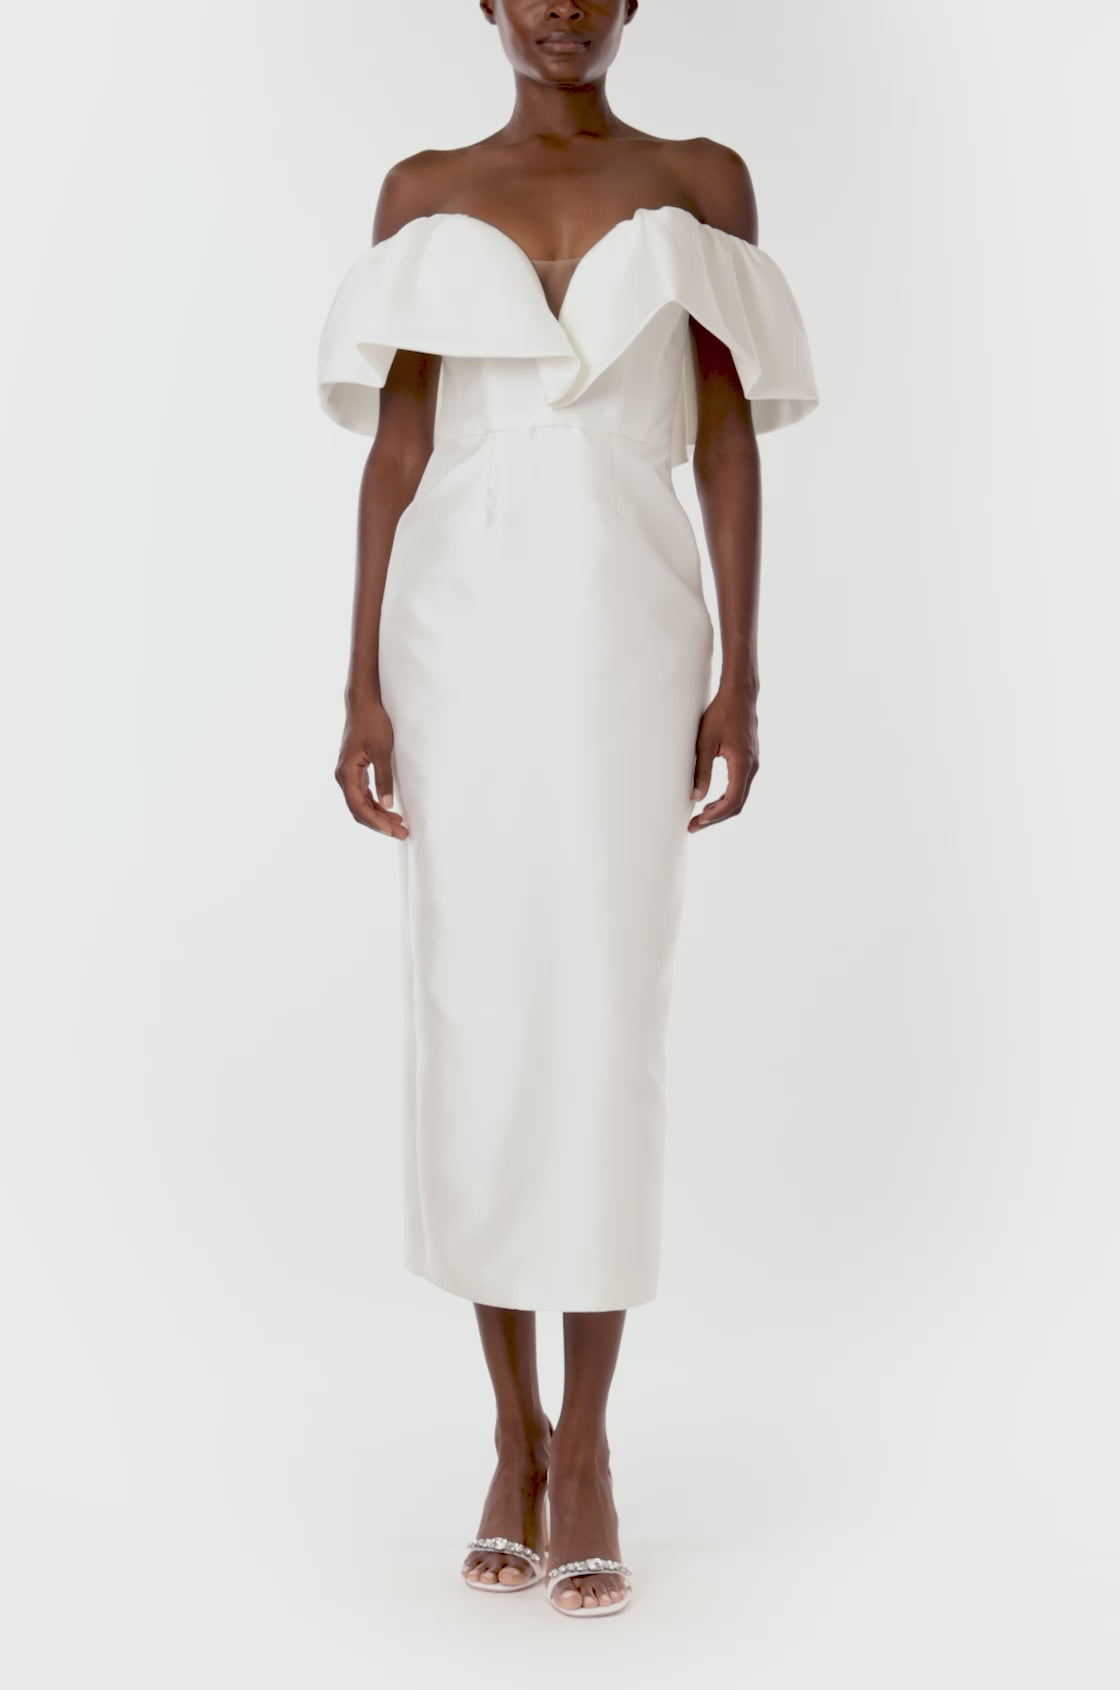 Monique Lhuillier midi length Chantel bridal dress with ruffle neckline and deep v sweetheart neckline in silk white mikado fabric.